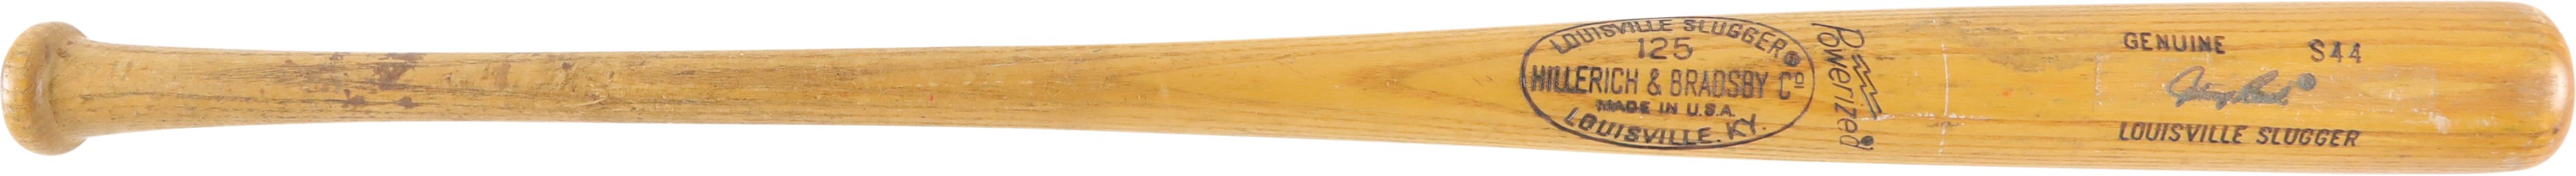 Baseball Equipment - 1979 Johnny Bench Cincinnati Reds Game Used Bat (PSA GU 10)